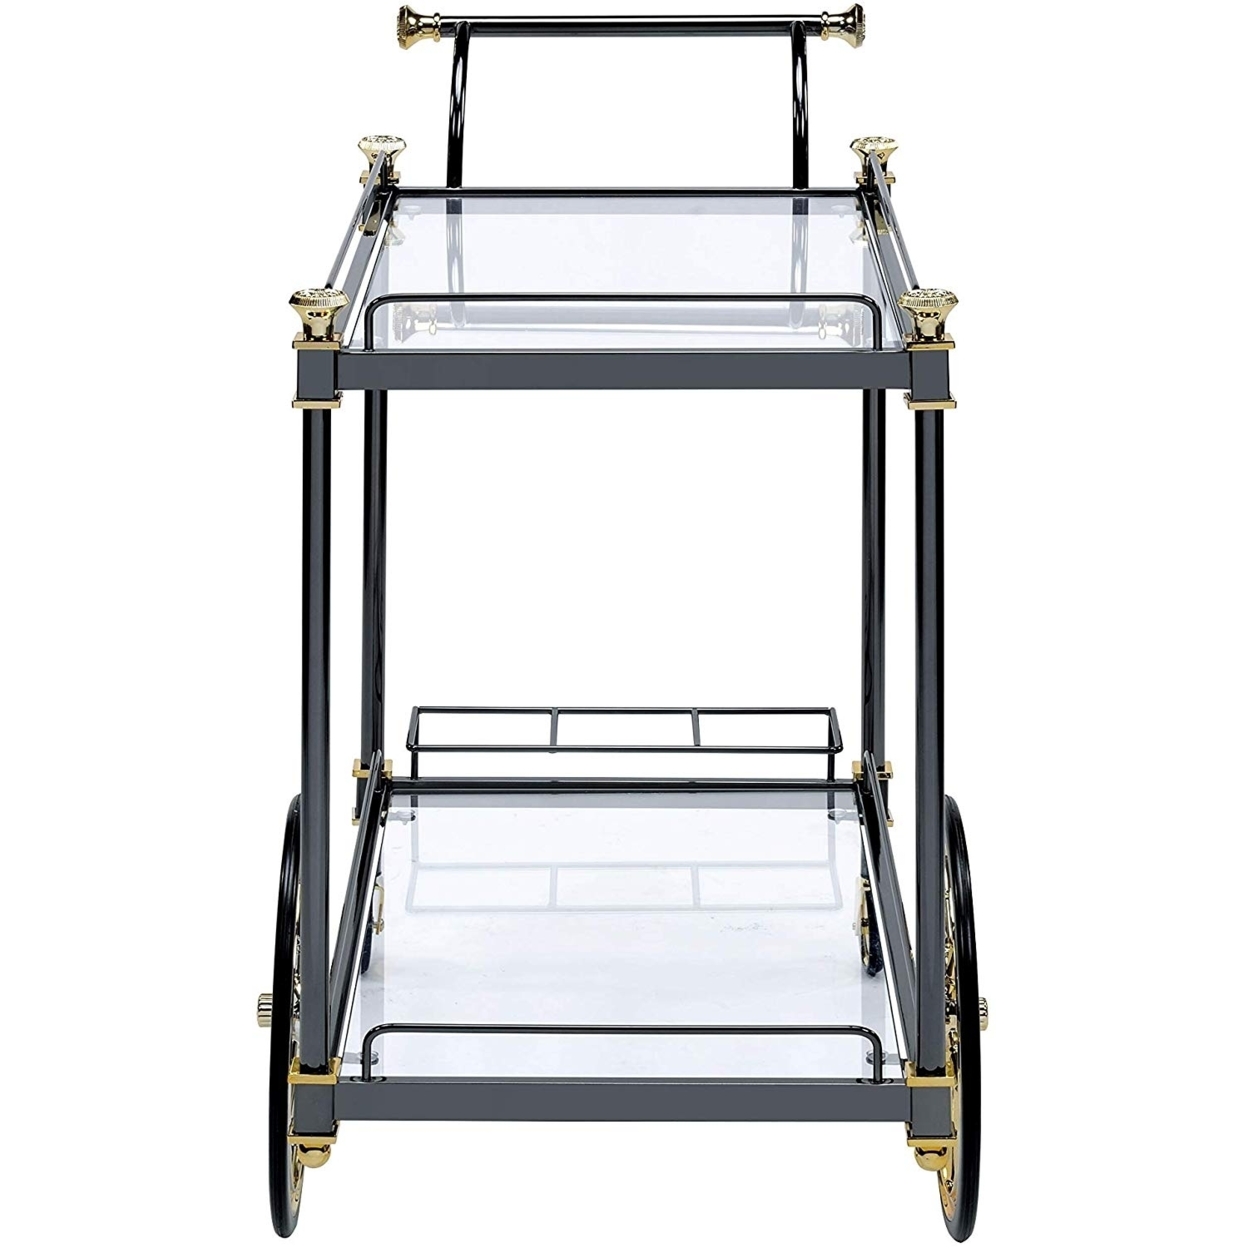 Metal Framed Serving Cart With Glass Shelves And Side Handle, Black And Gold- Saltoro Sherpi